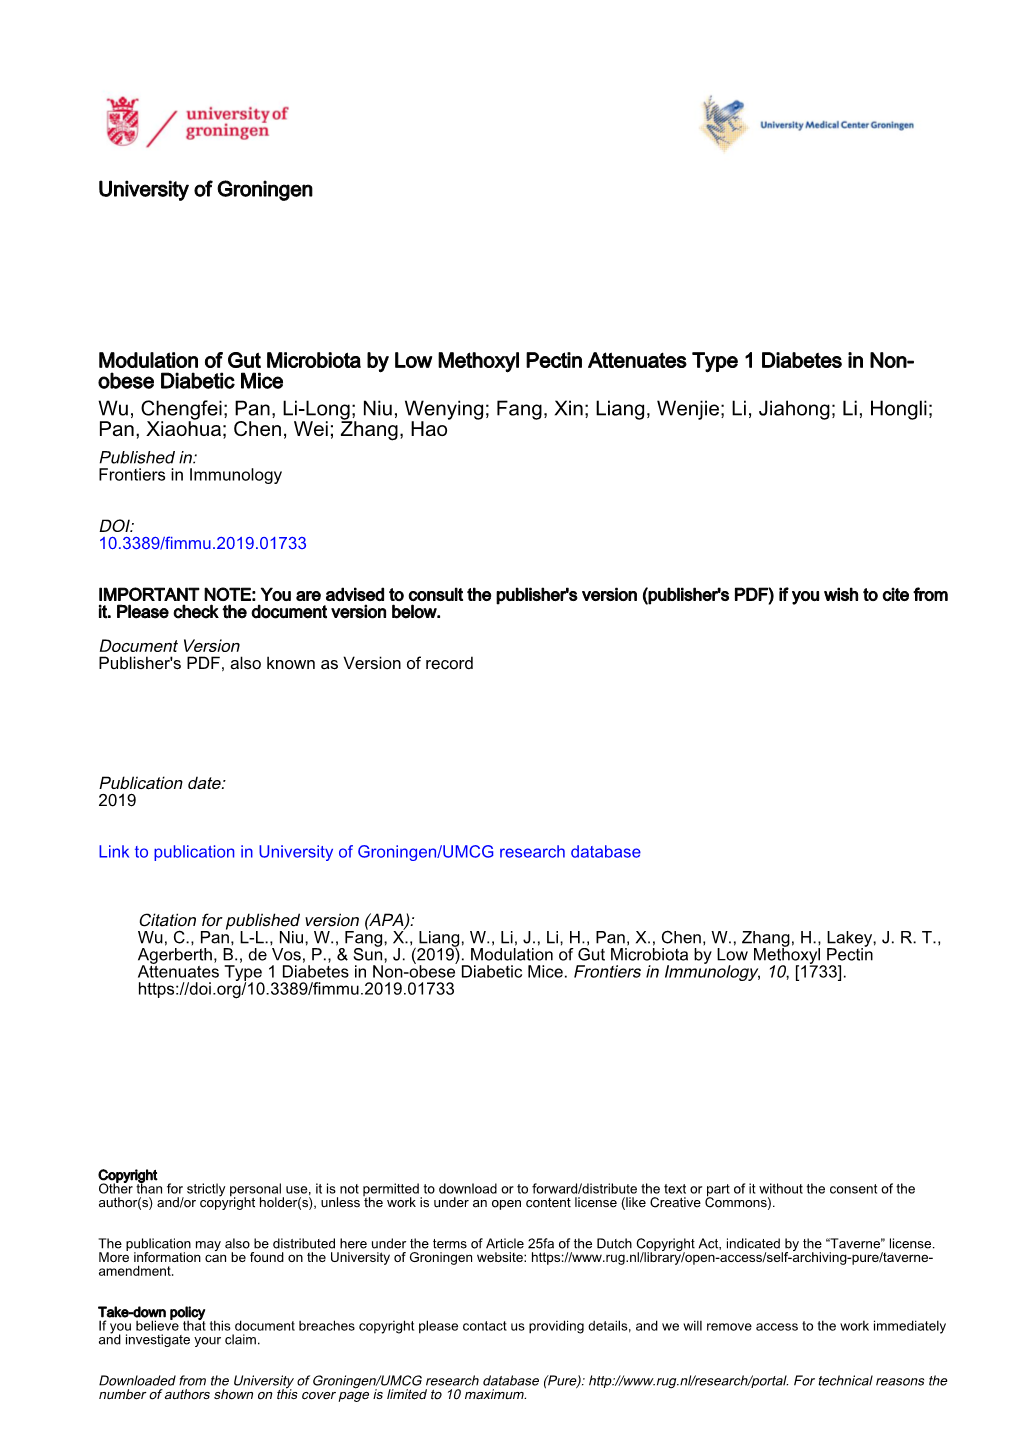 Modulation of Gut Microbiota by Low Methoxyl Pectin Attenuates Type 1